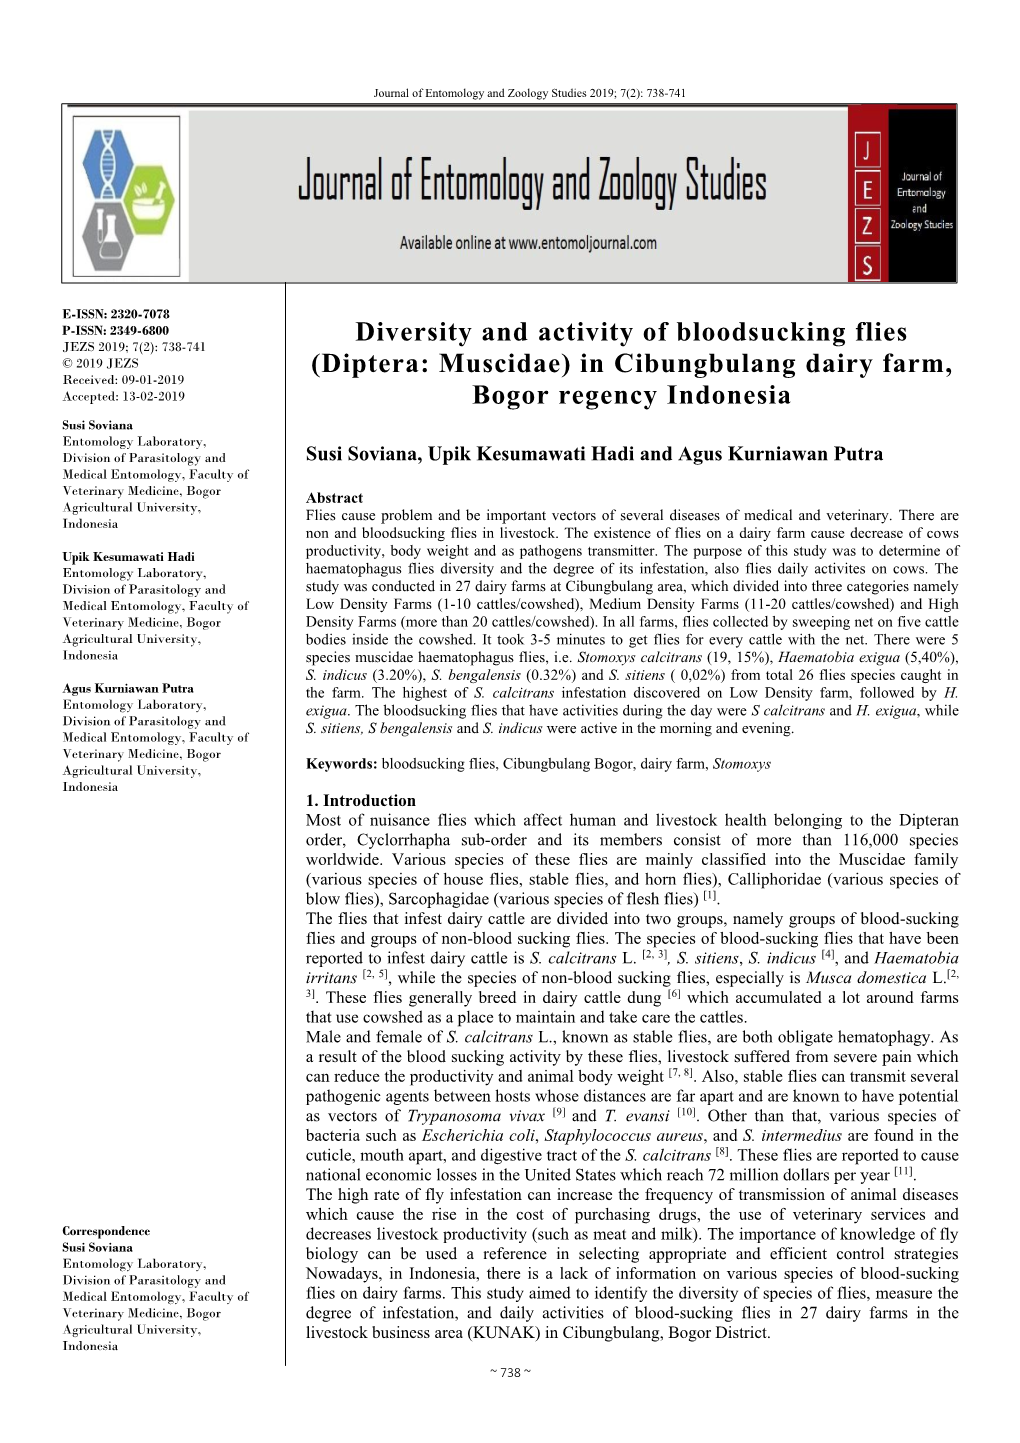 Diversity and Activity of Bloodsucking Flies (Diptera: Muscidae)